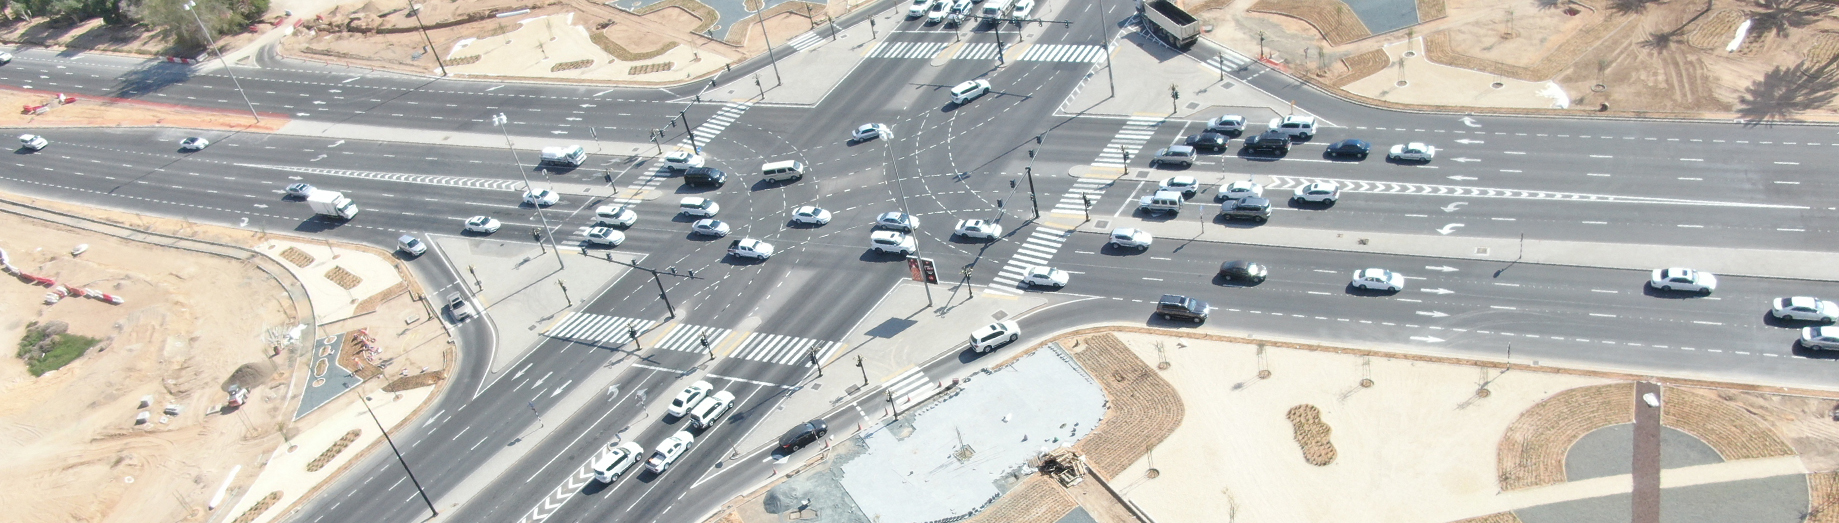 Al Ain Stadium Traffic Movement Improvement